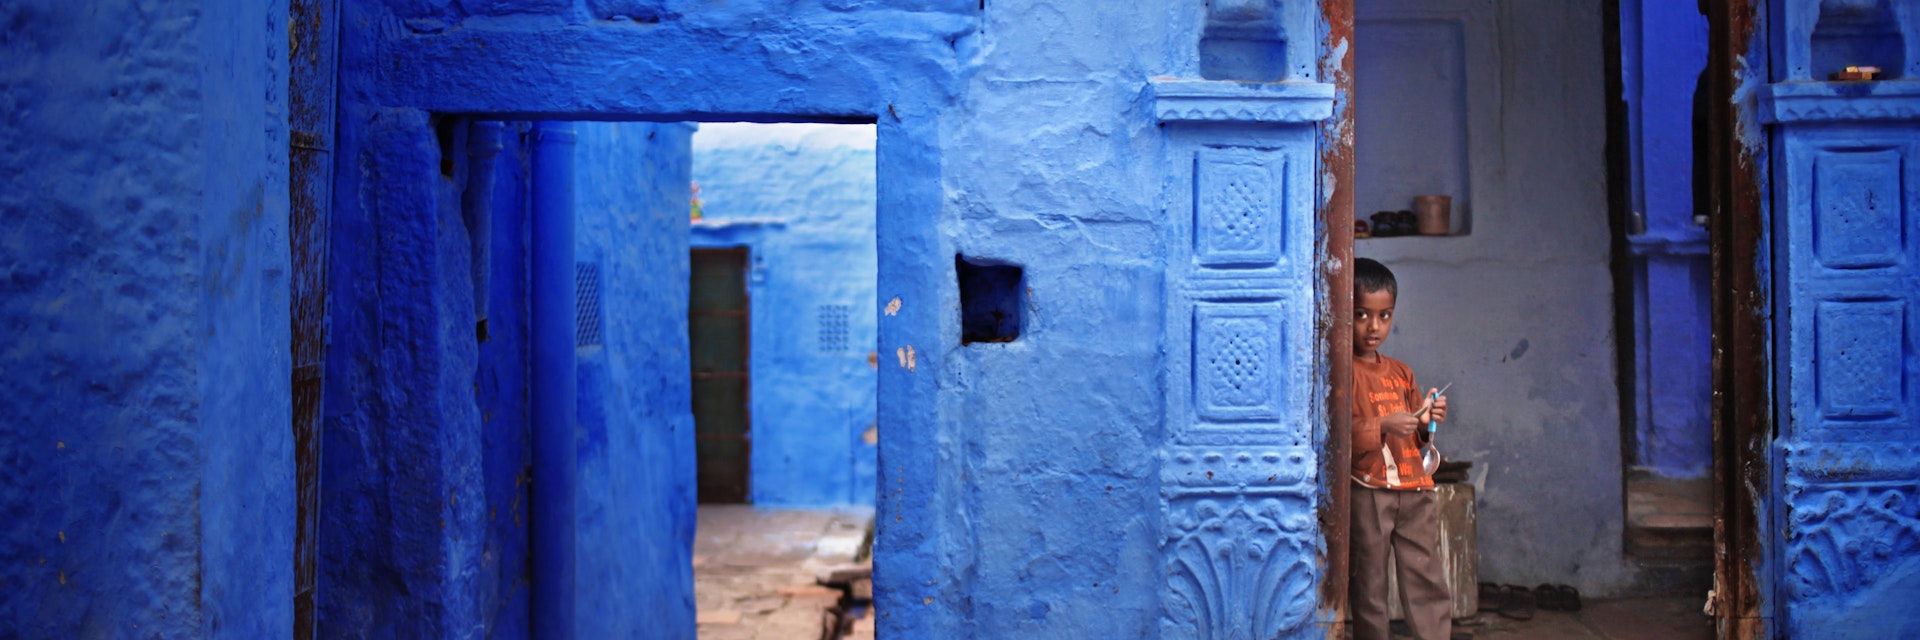 Blue City, Jodhpur in India...2014.02 ⓒWoosra.*Blog : http://woosra.com